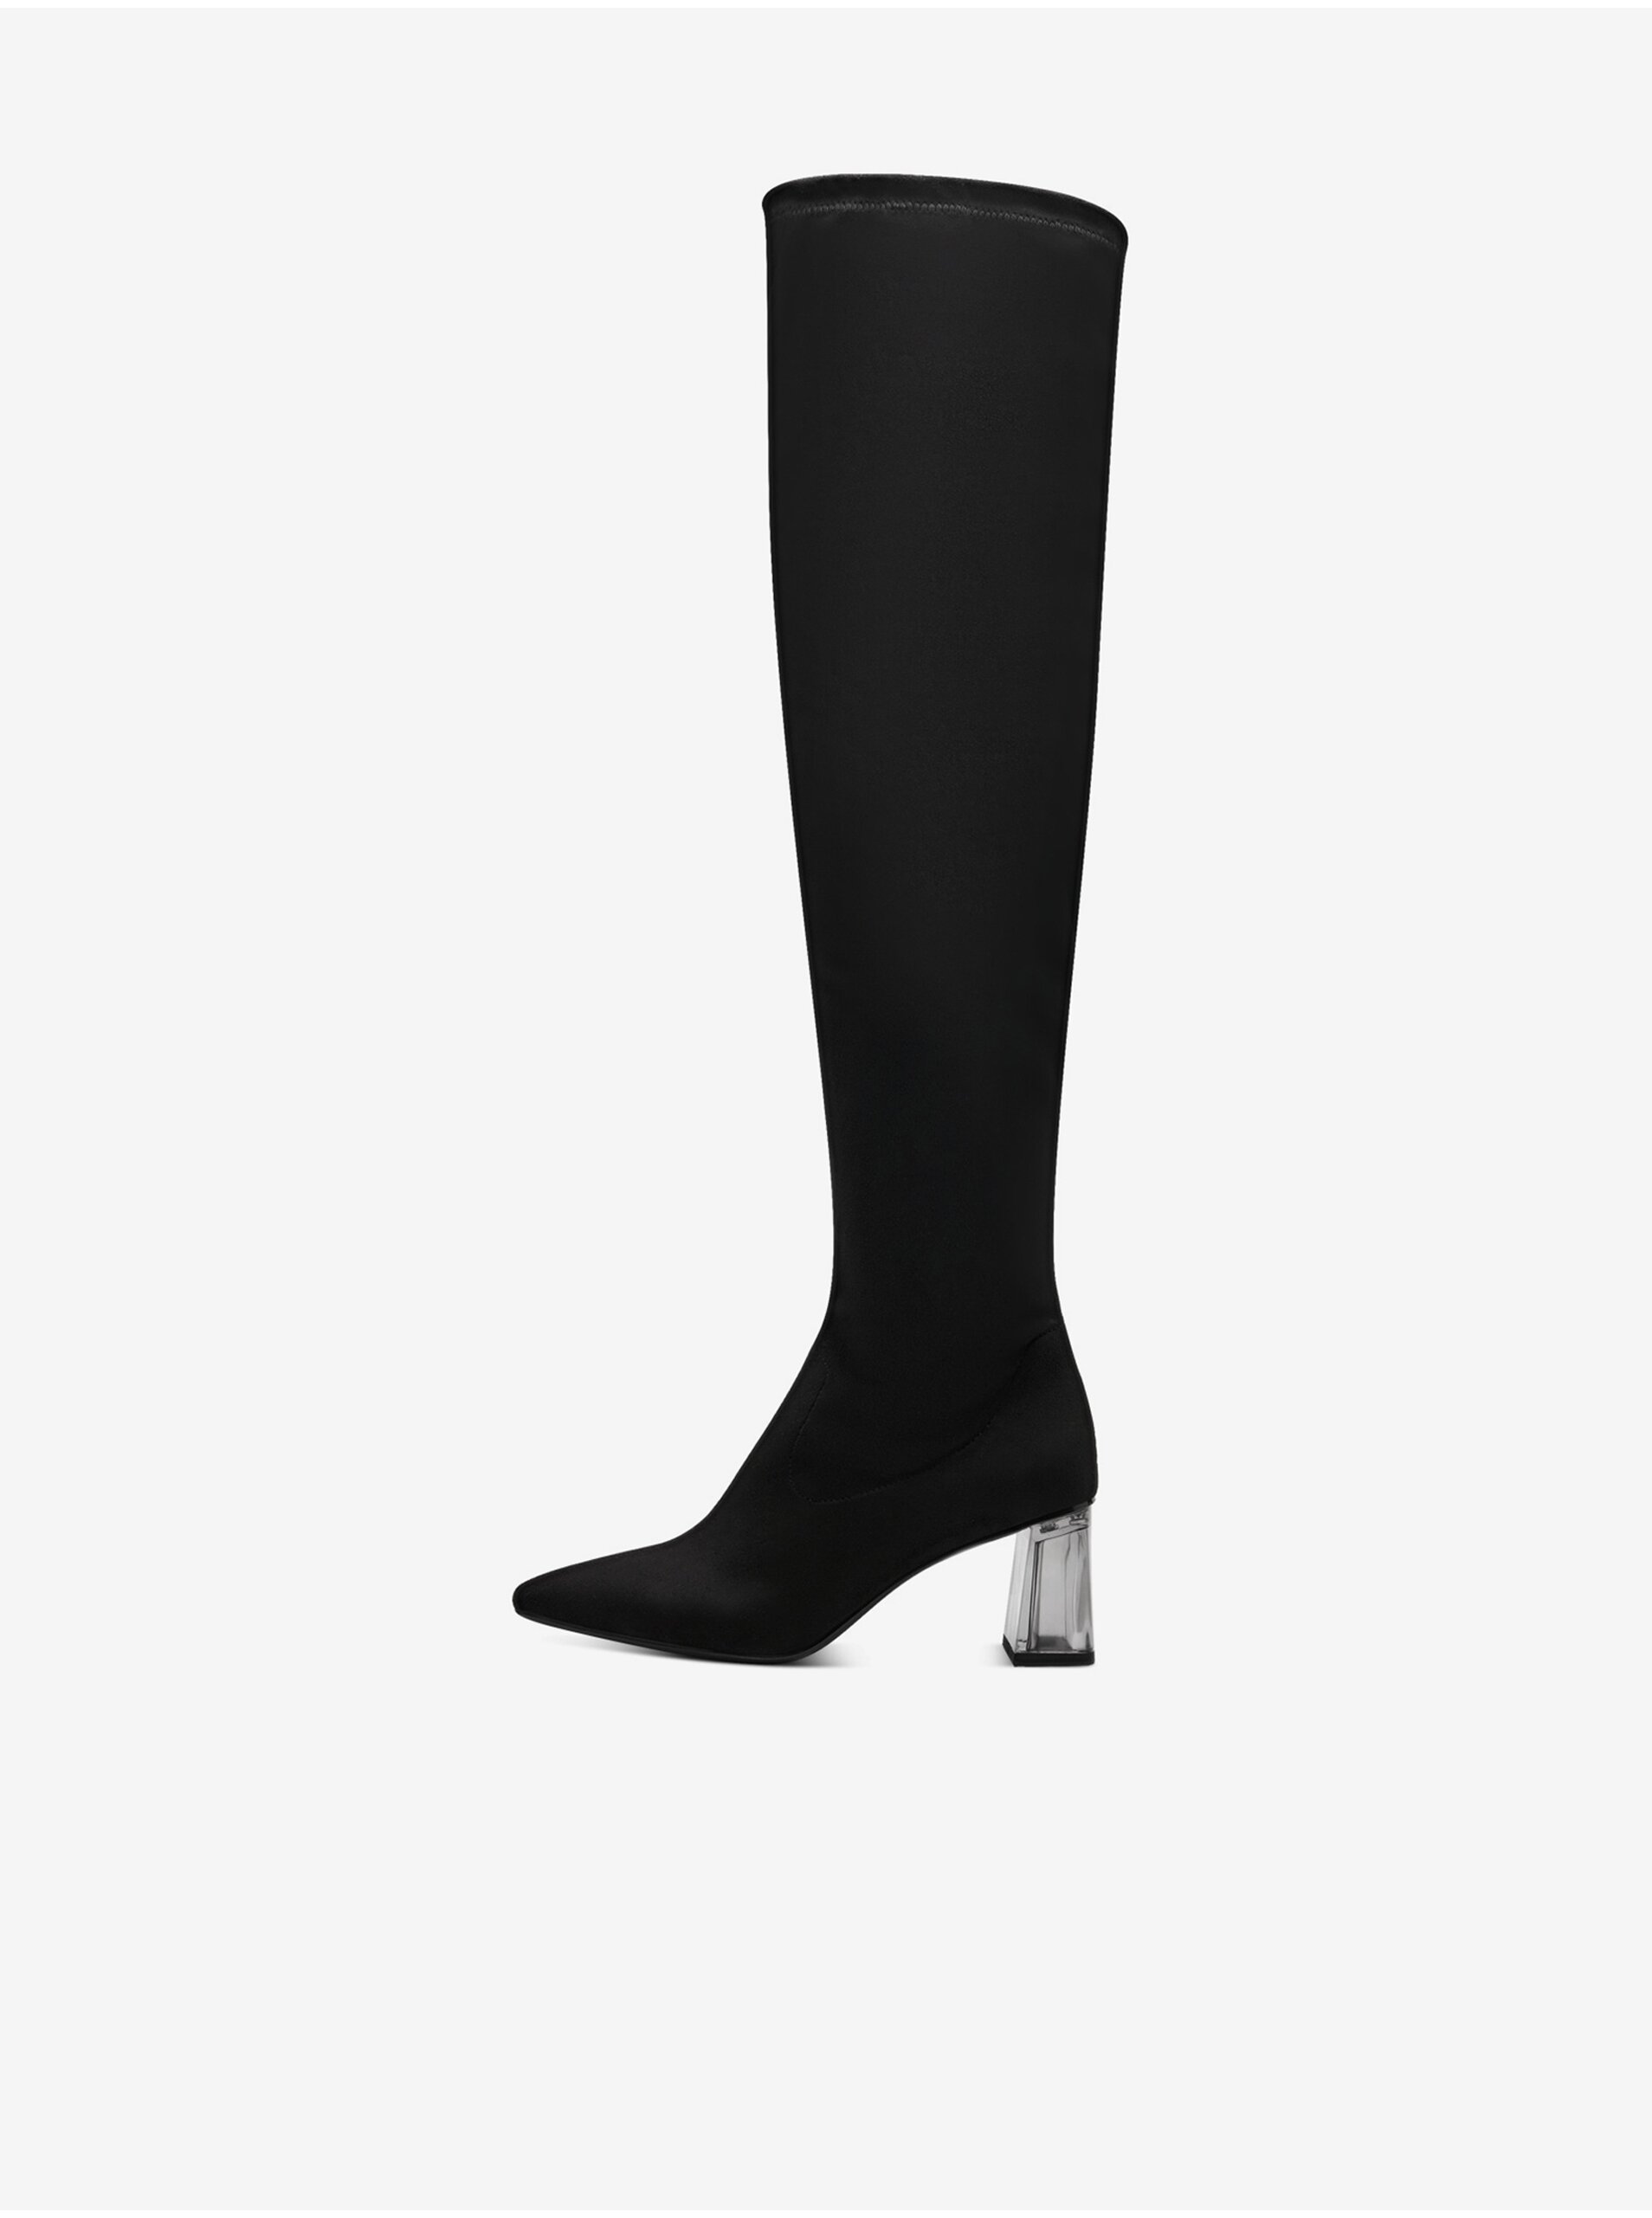 E-shop Čierne dámske vysoké čižmy v semišovej úprave Tamaris